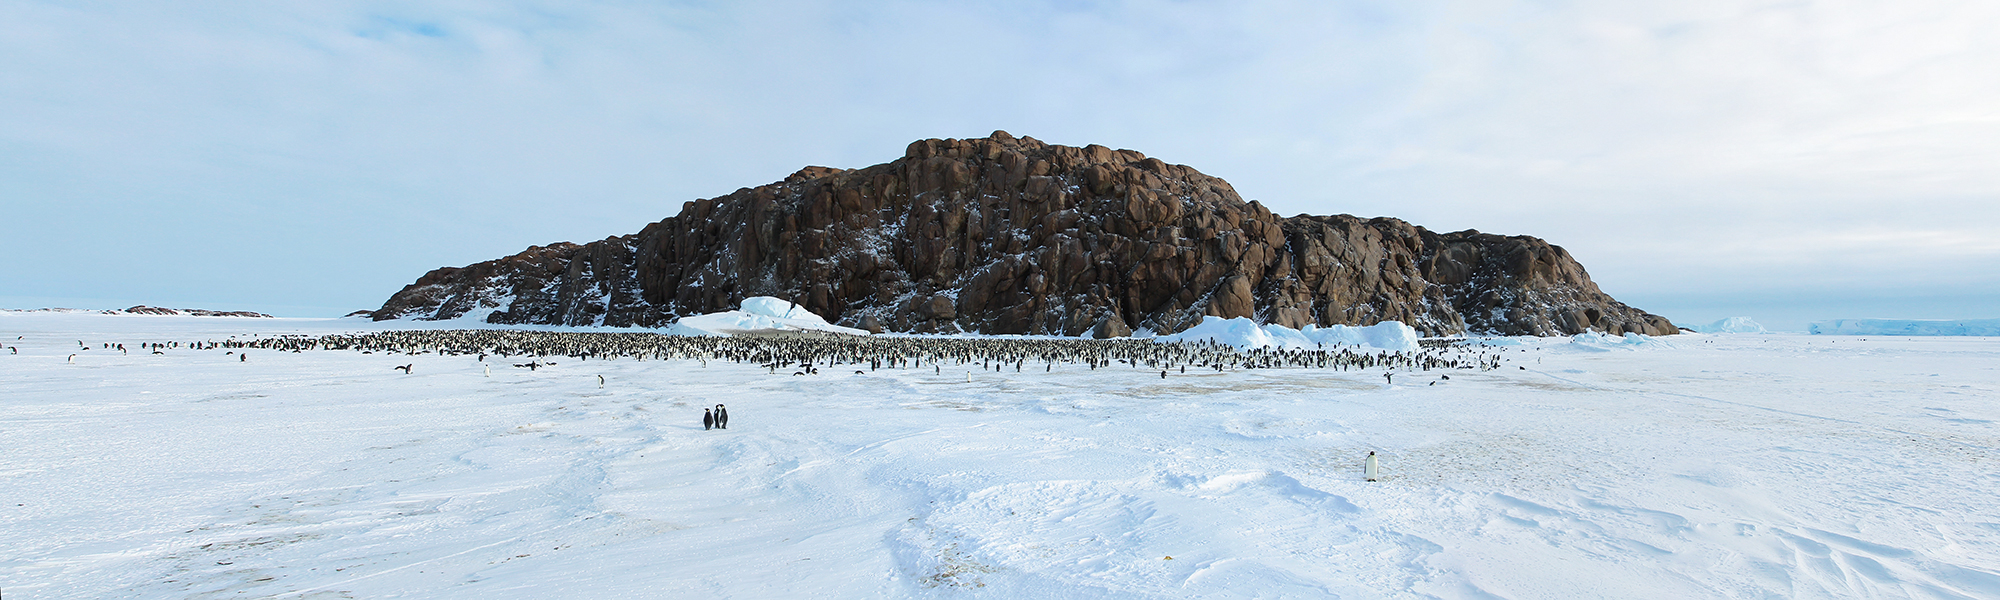 Voyage en Péninsule antarctique © Sergey / Adobe Stock